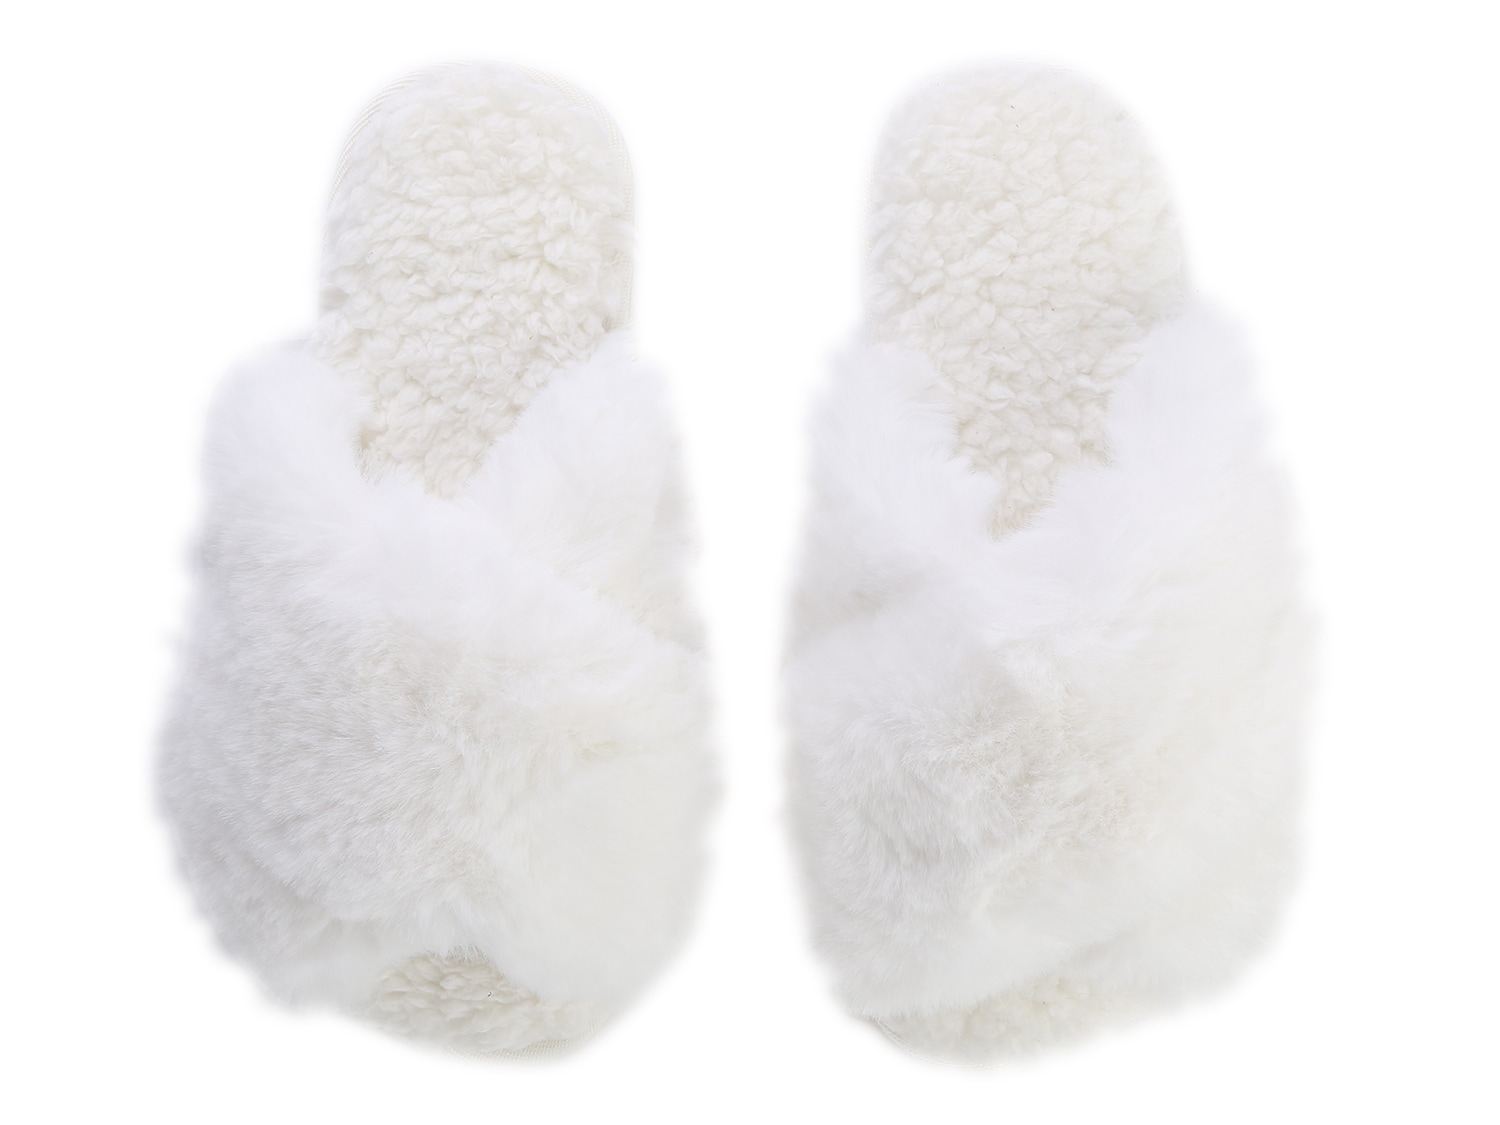 furry criss cross slippers